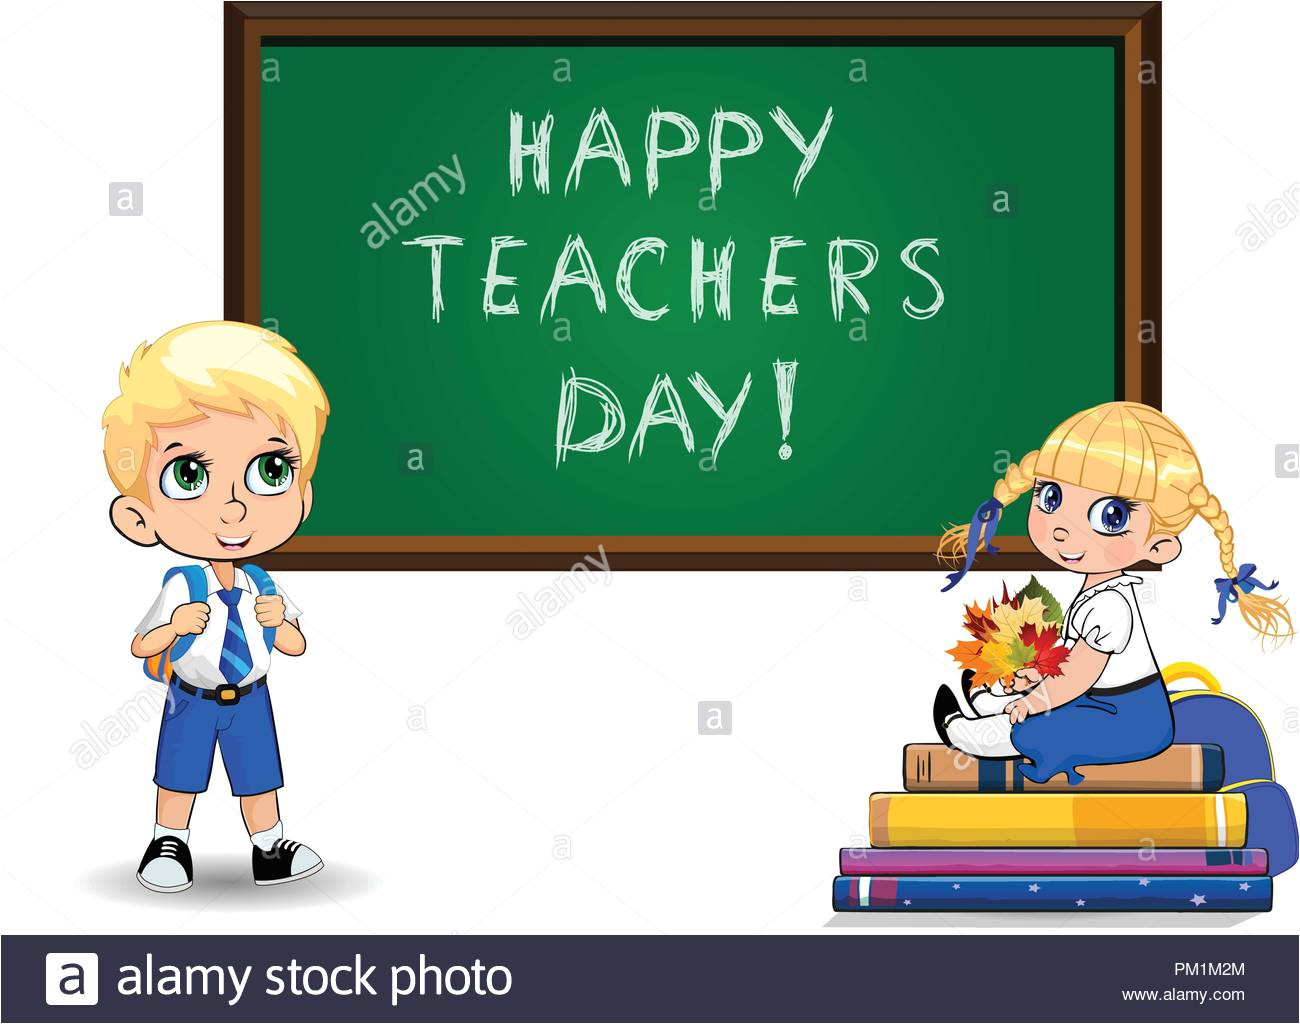 happy teachers day greeting card with cute cartoon school girl sitting on books pile and schoolboy near blackboard on white vector illustration of ka pm1m2m jpg